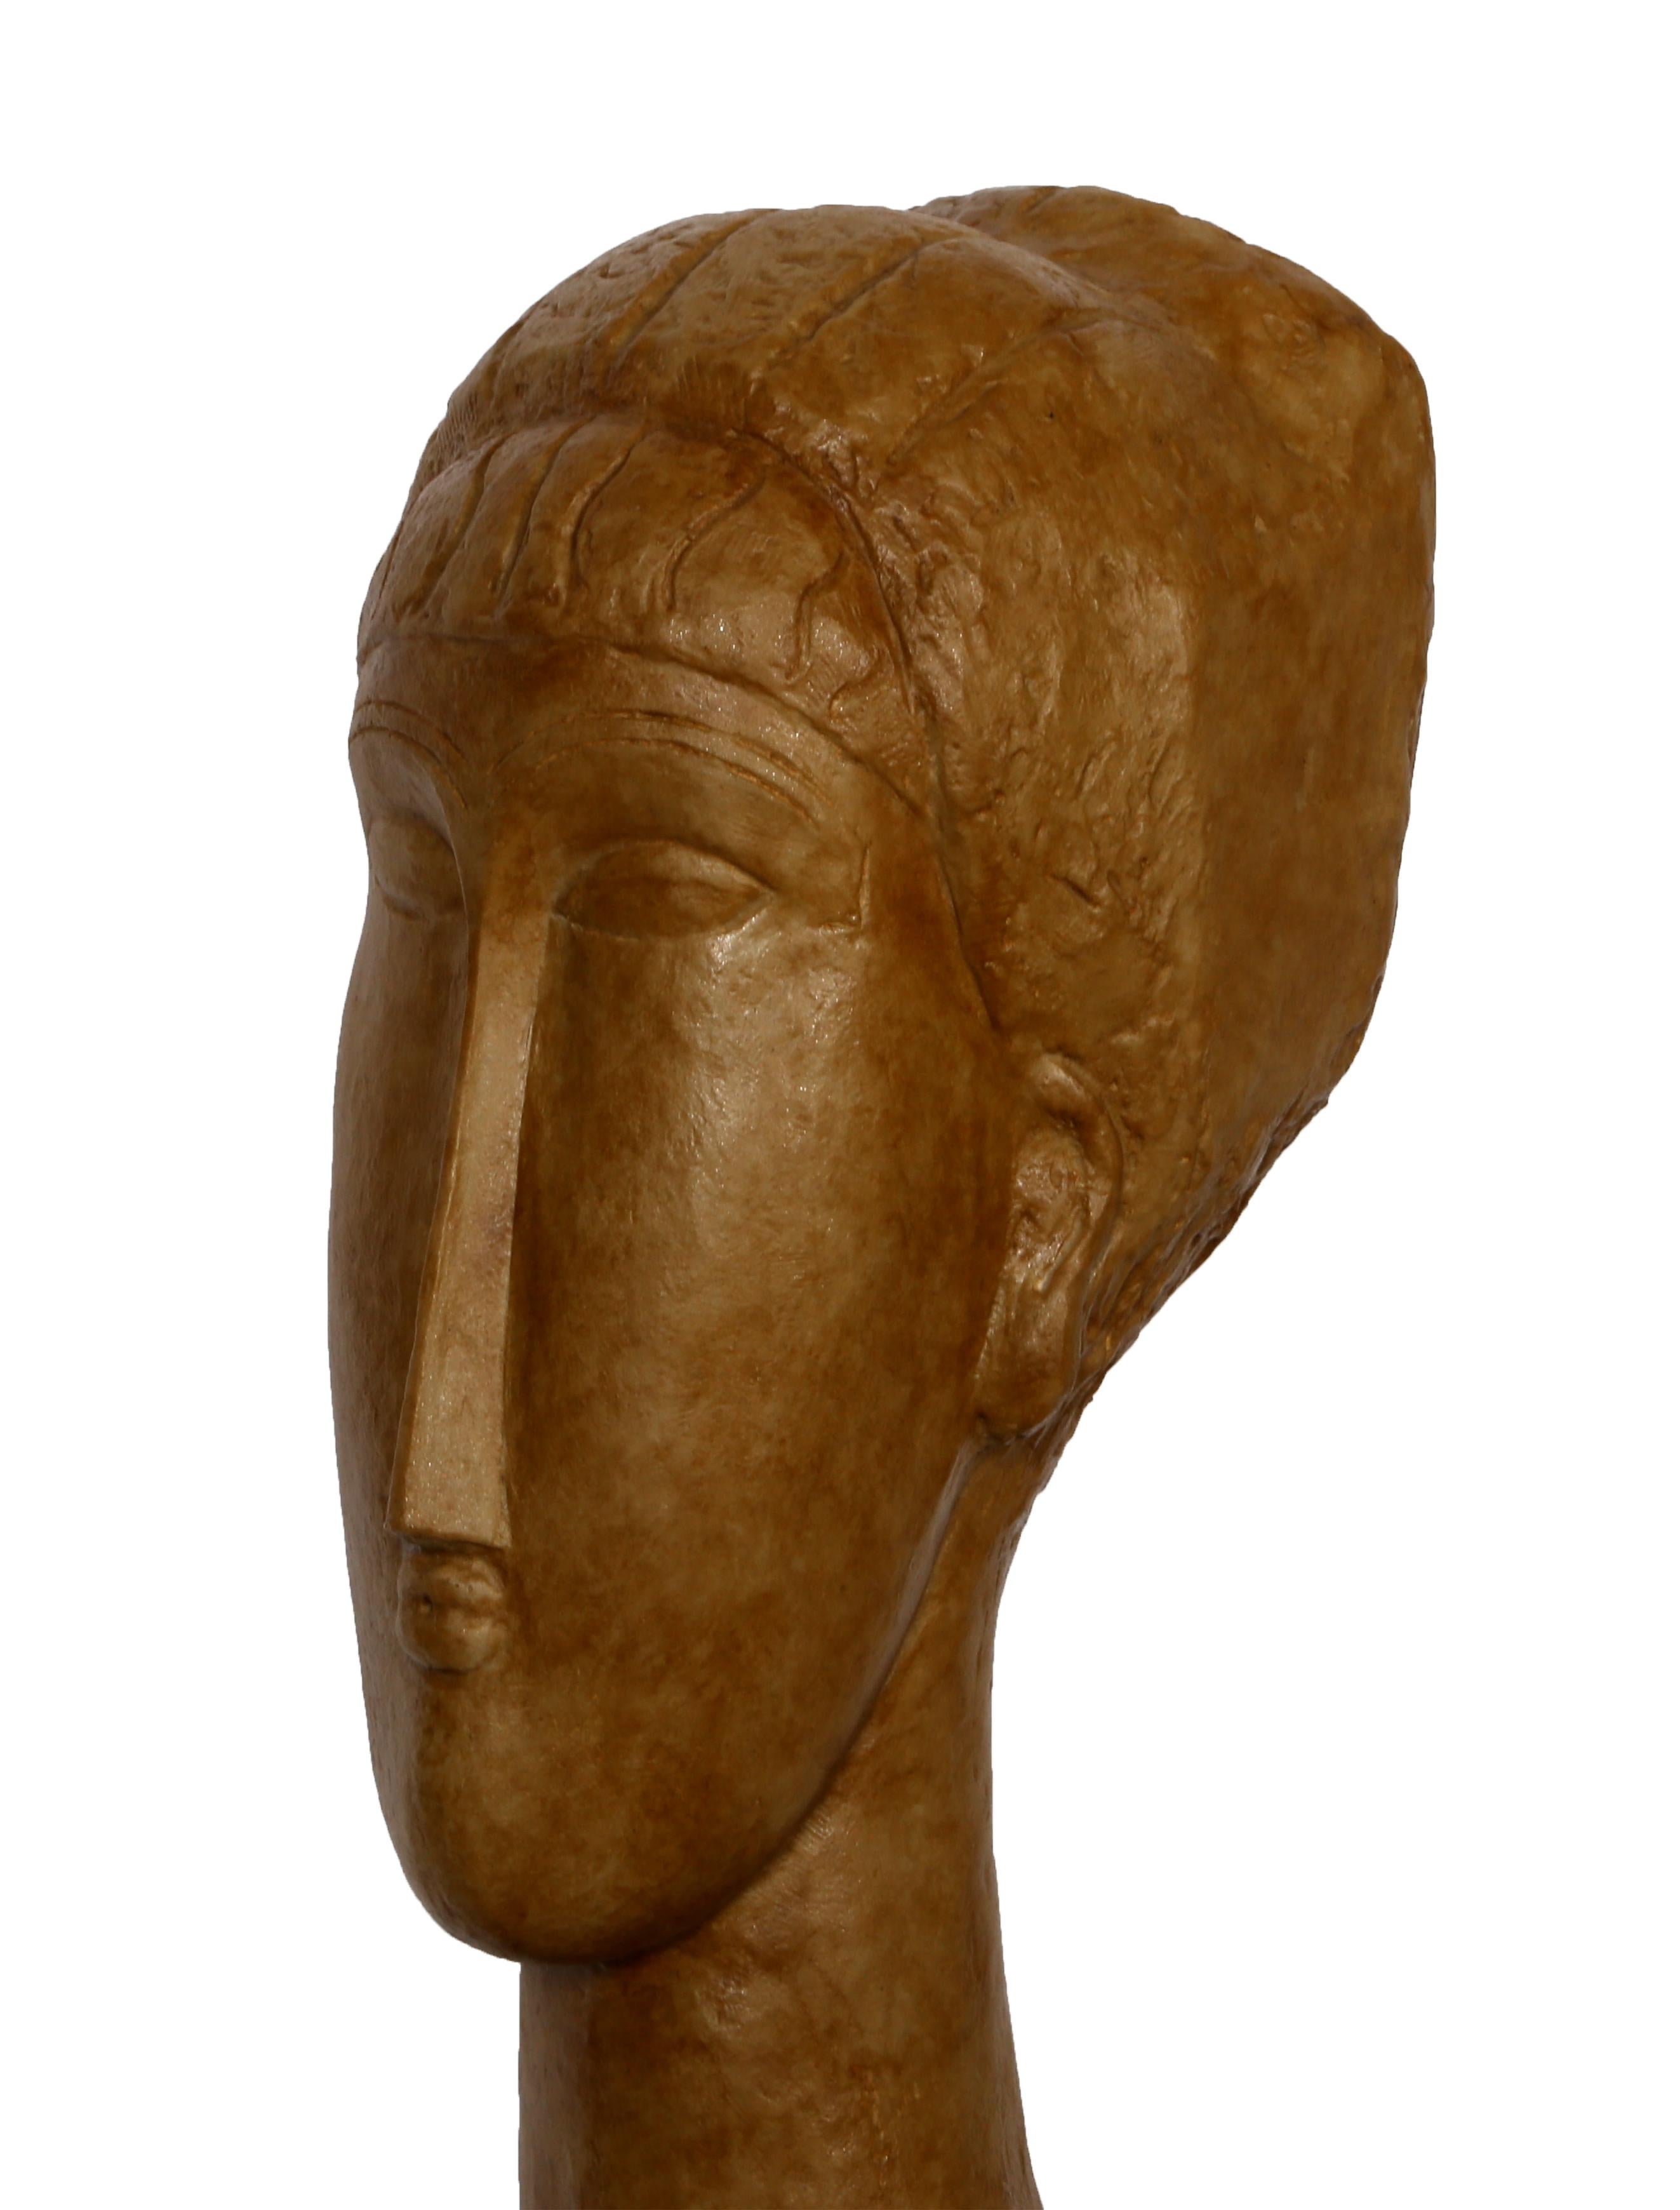 Tête de Femme, after Modigliani - Sculpture by Amedeo Modigliani